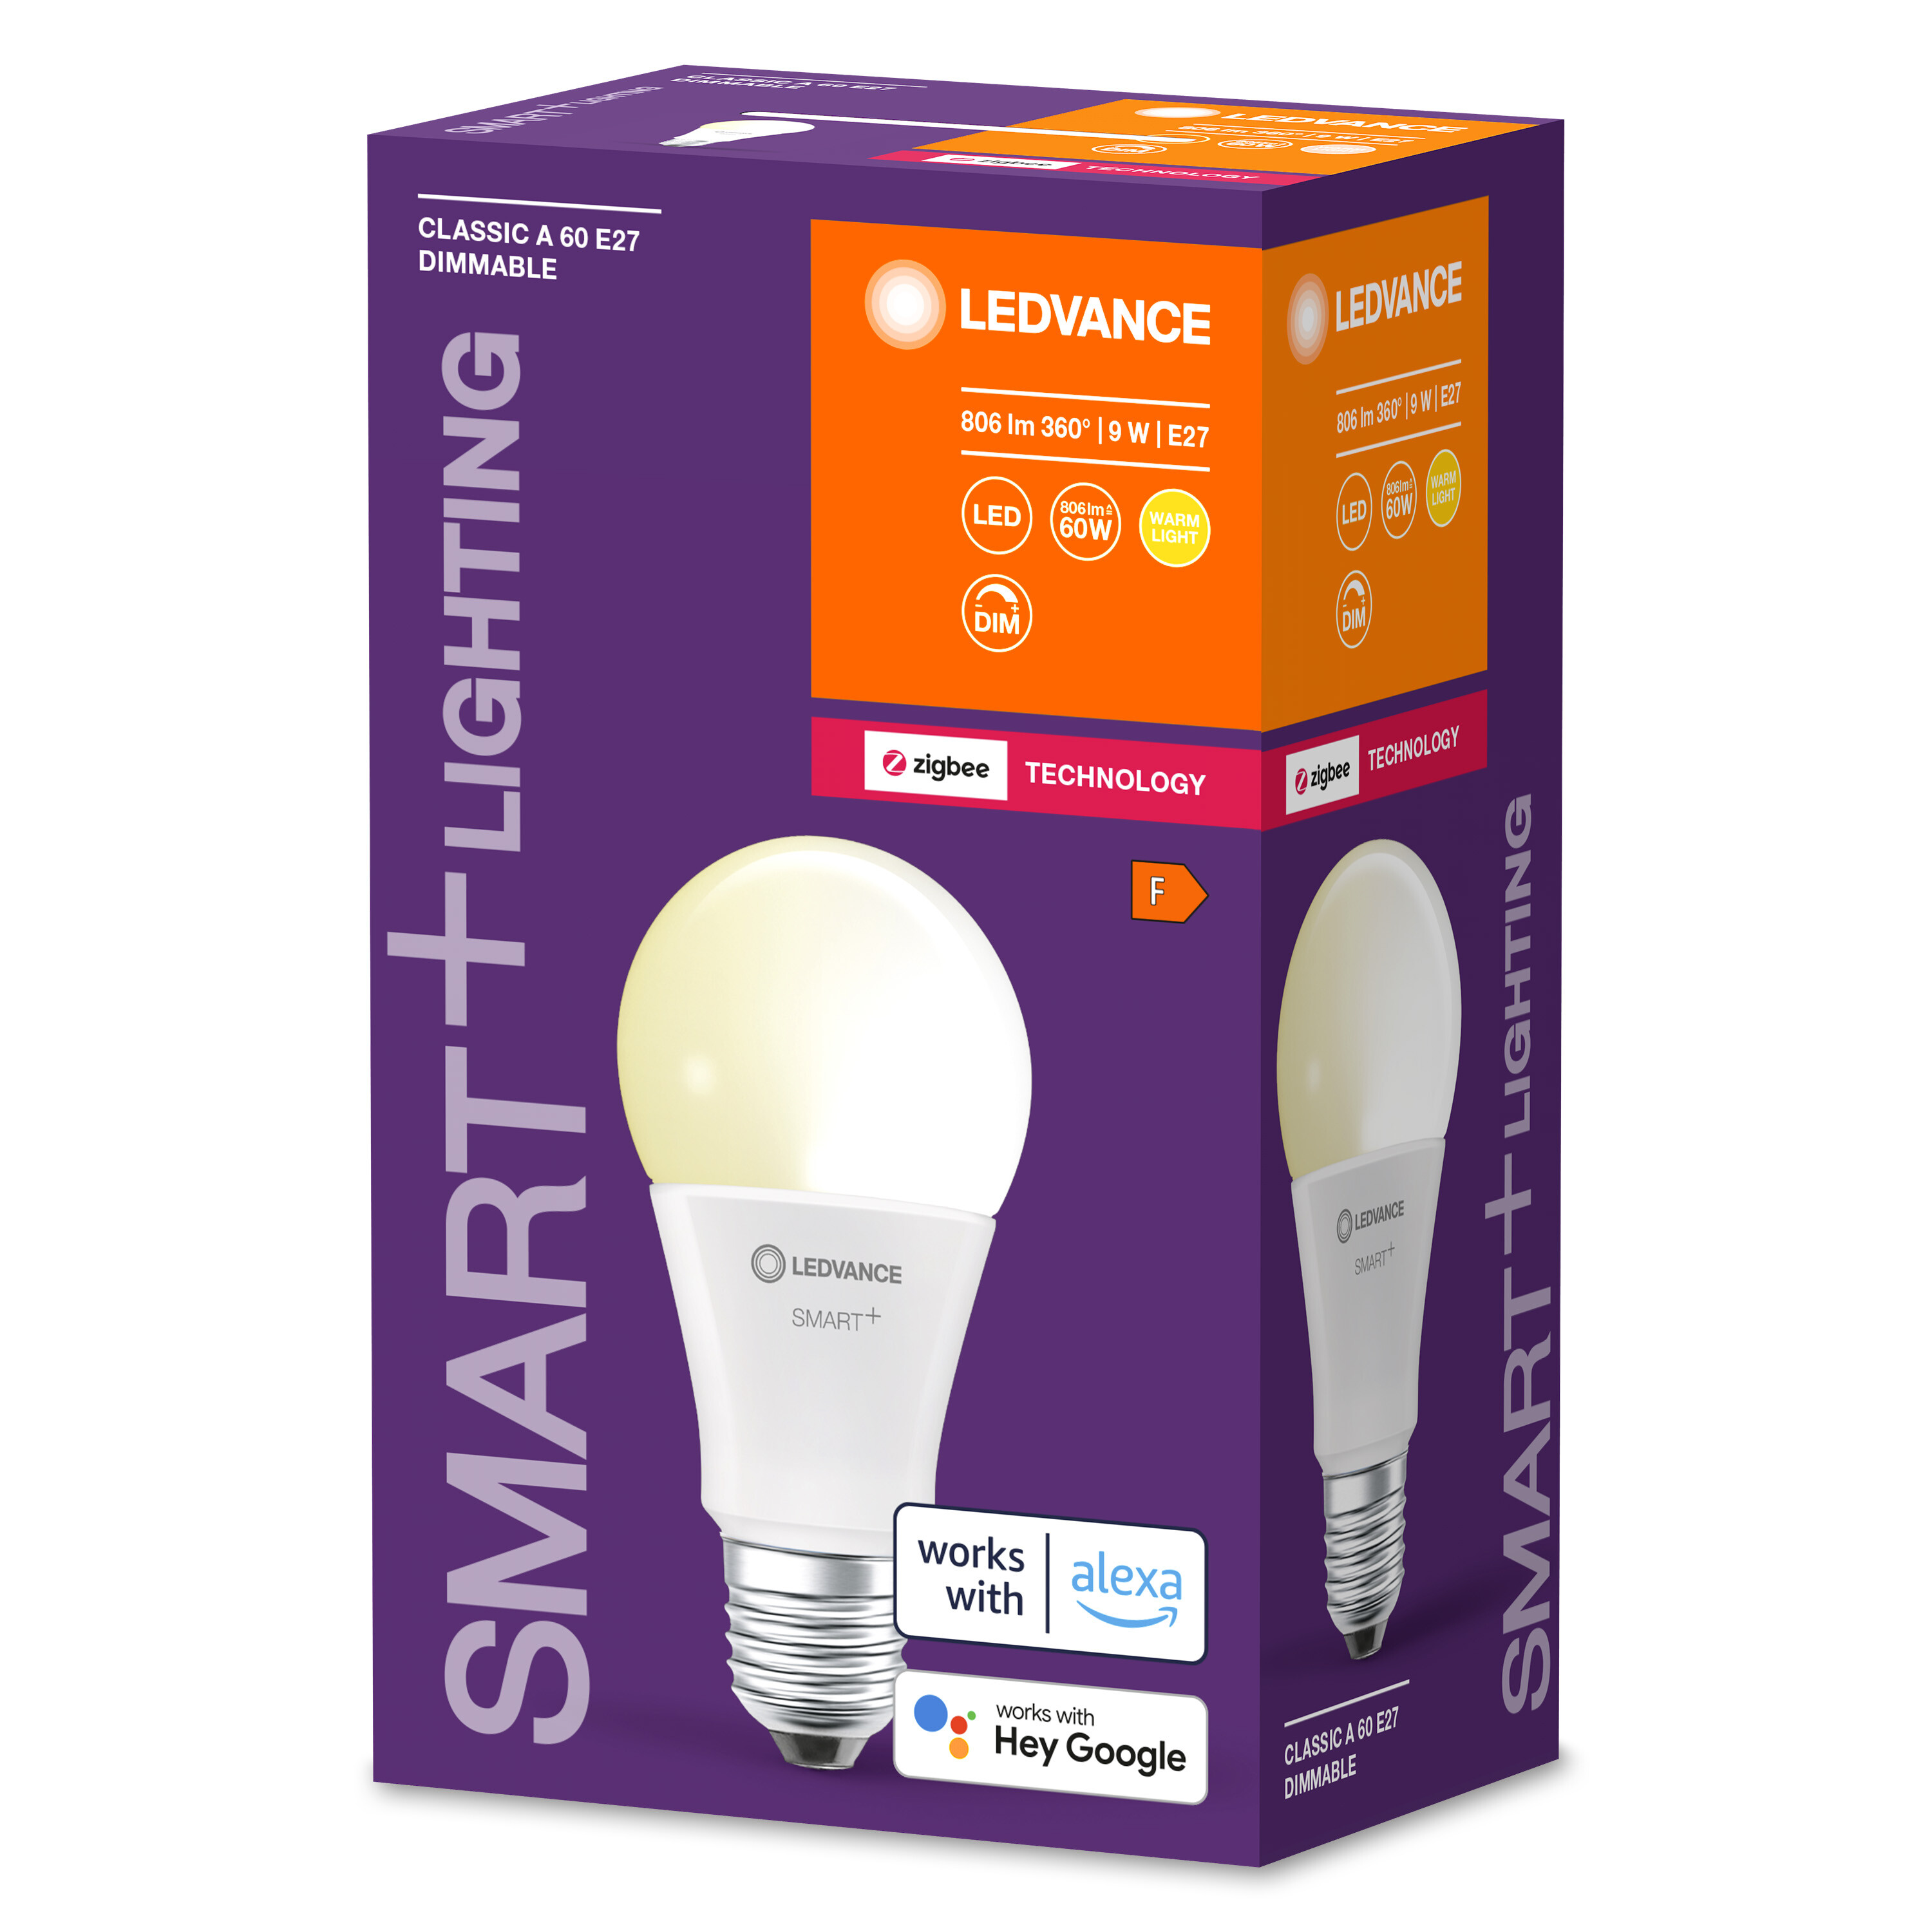 Warmweiß Classic Lampe LED Dimmable SMART+ LEDVANCE